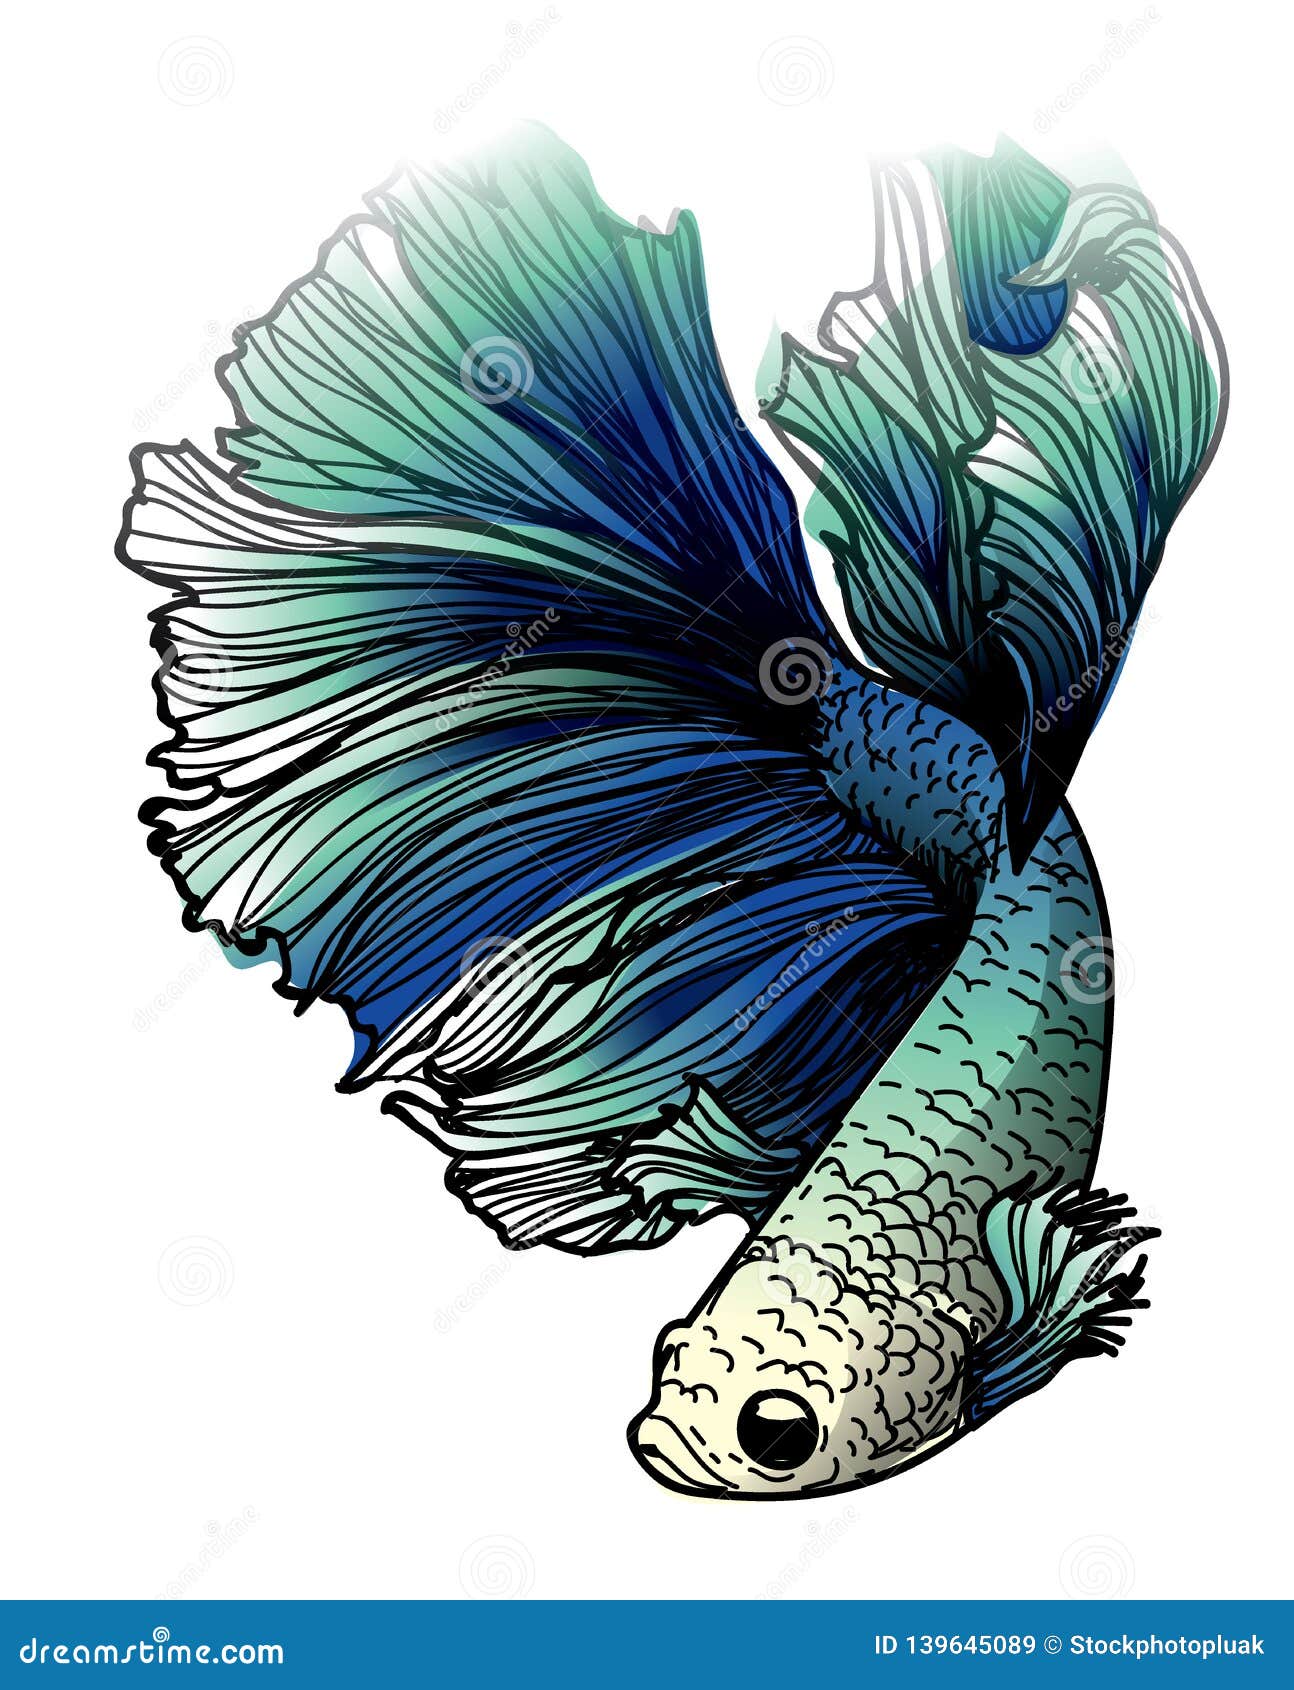 Premium Vector | Beautiful betta fish illustration